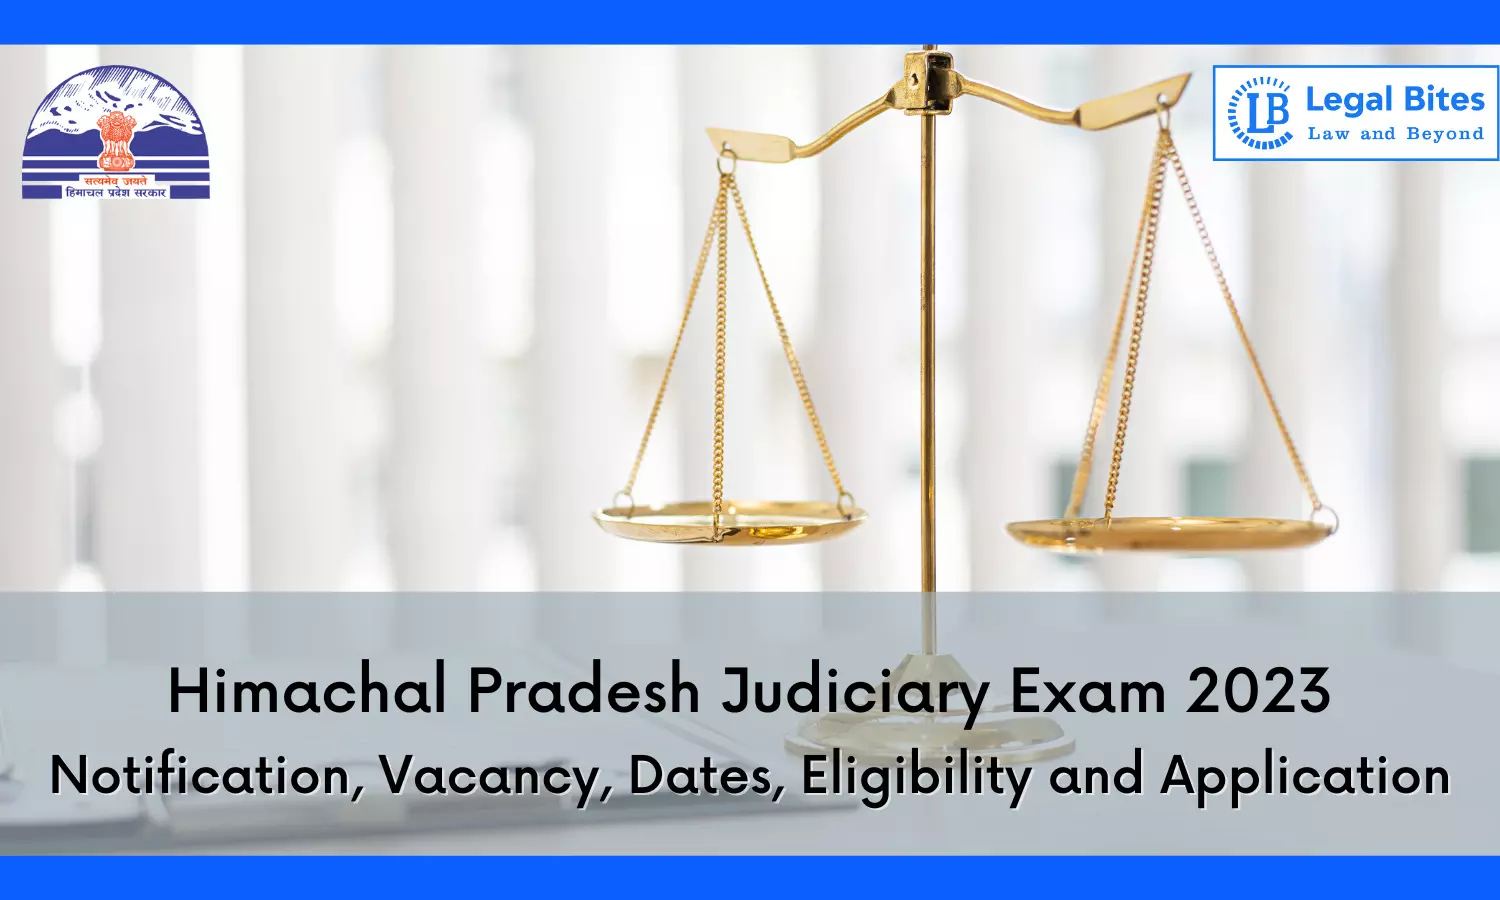 Himachal Pradesh Judiciary Exam 2023: Notification, Vacancy, Dates, Eligibility and Application